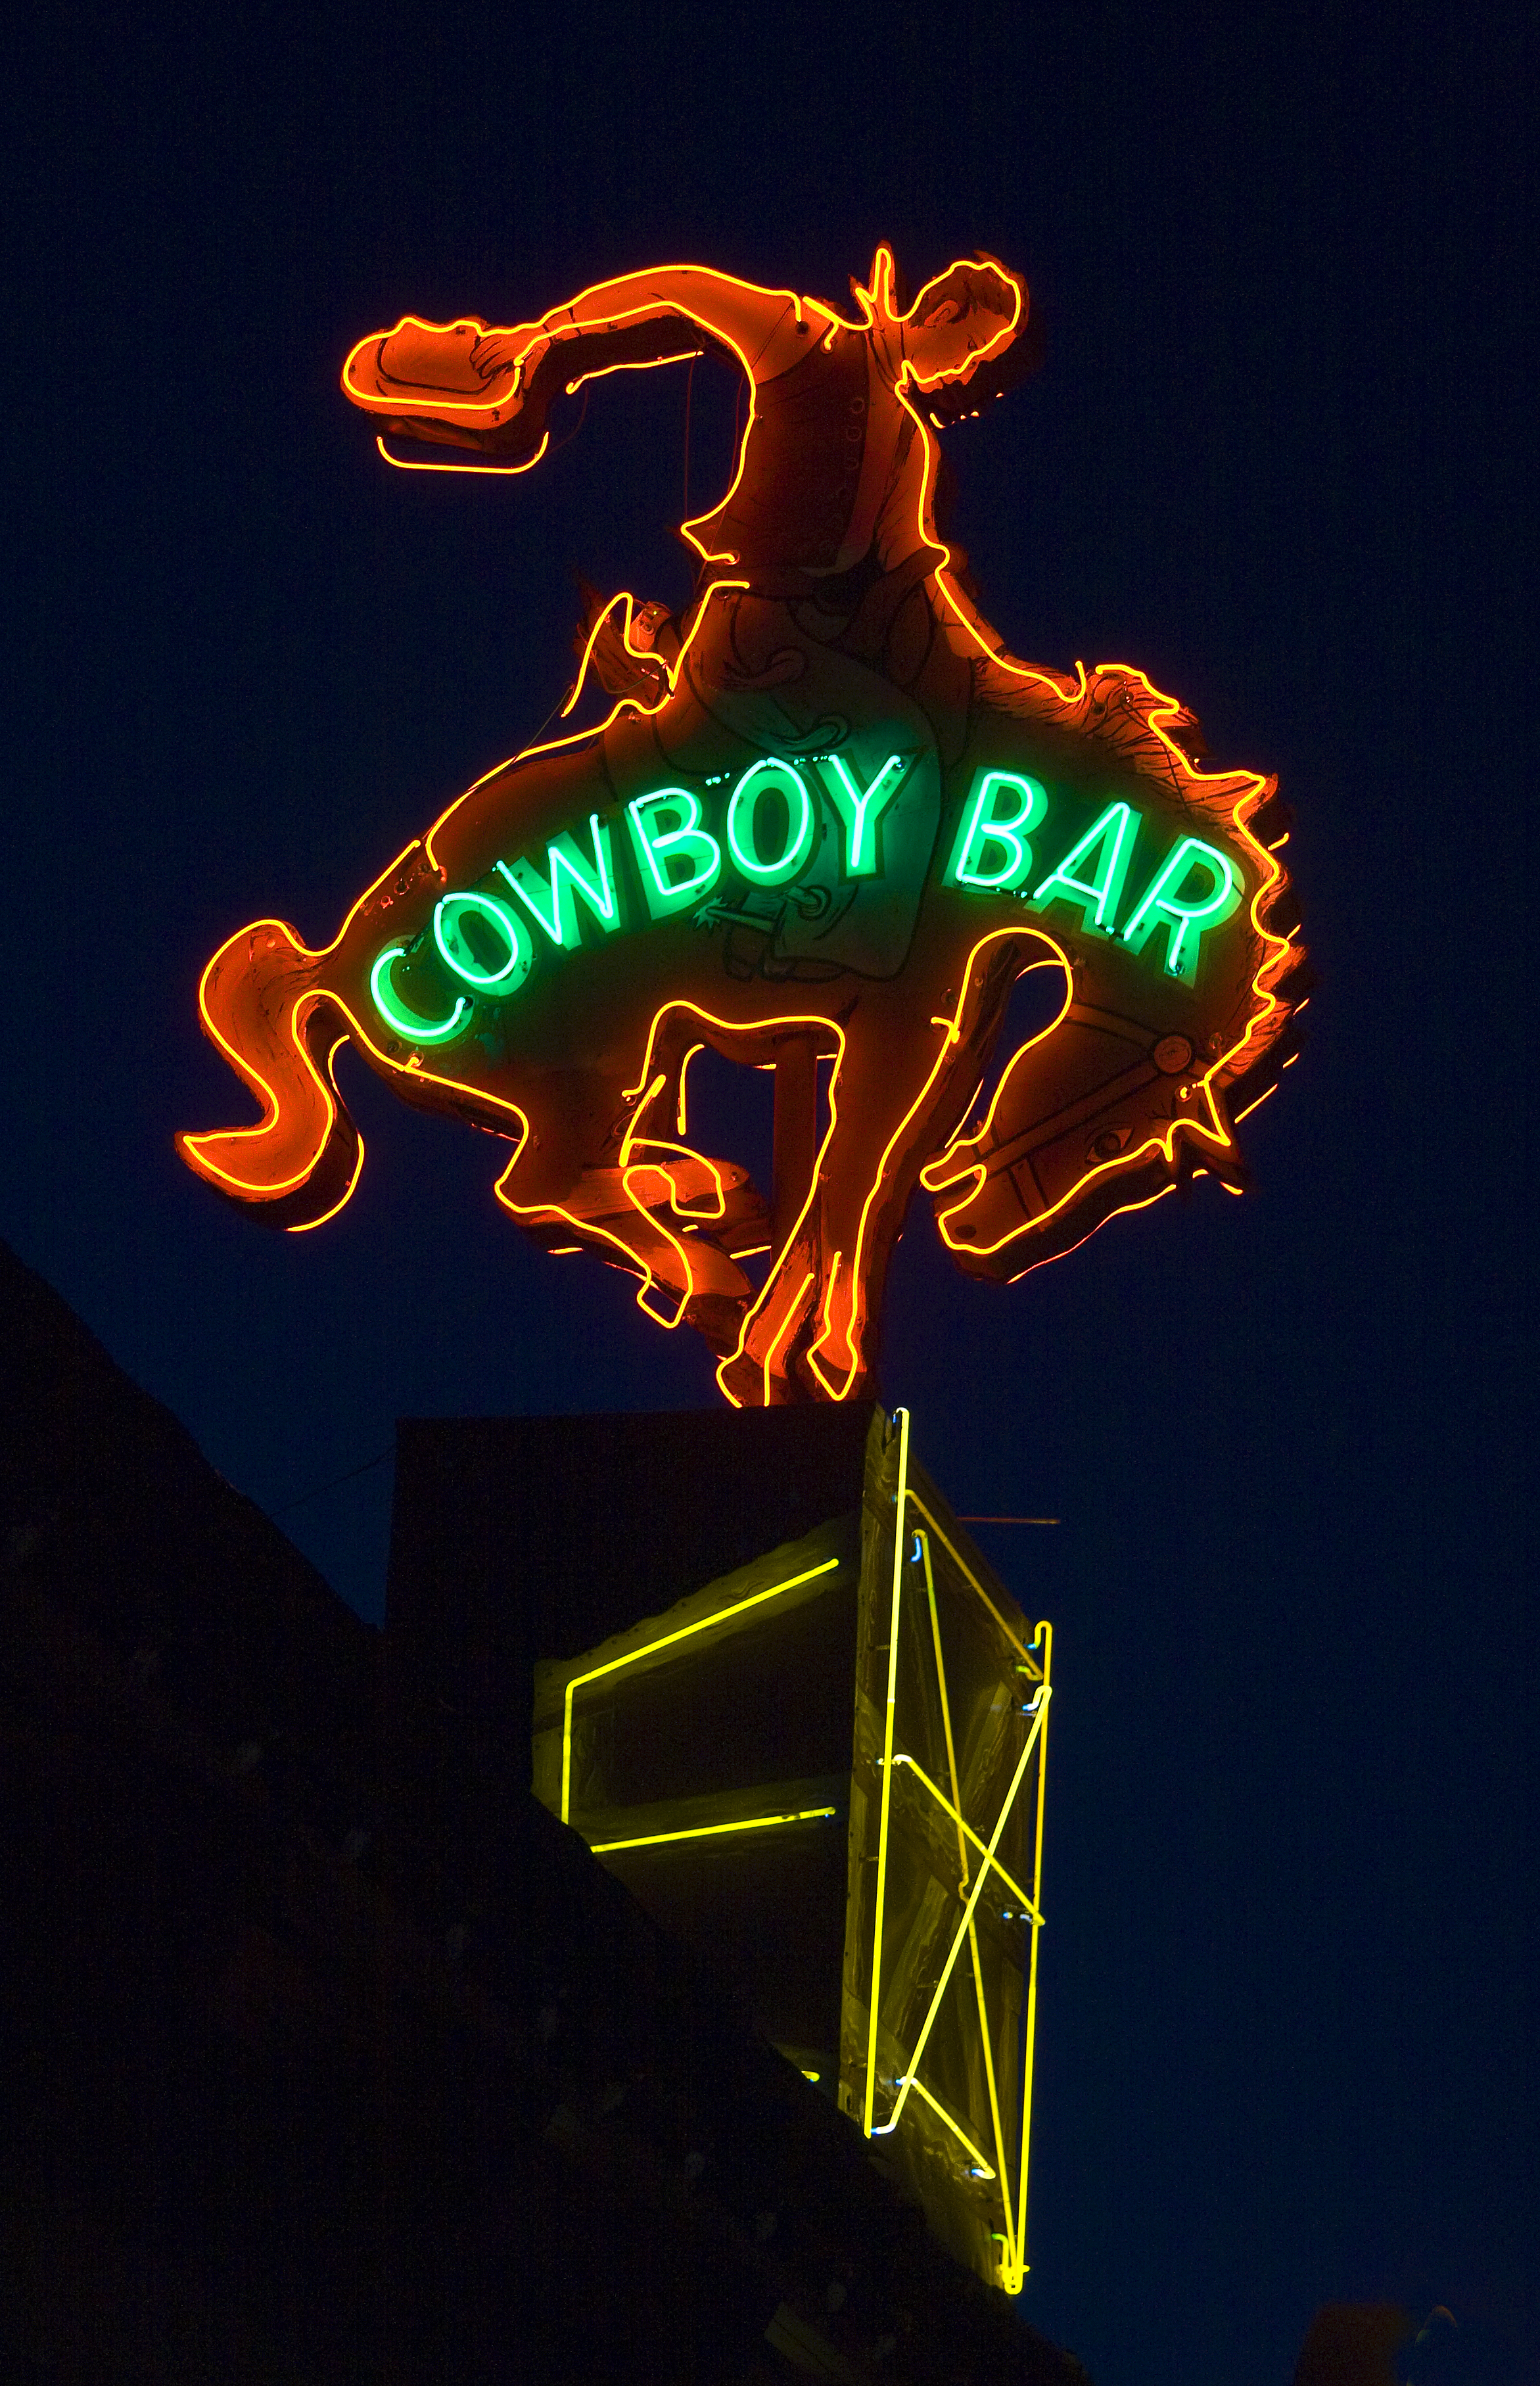 File:Cowboy Bar sign Jackson WY1.jpg - Wikimedia Commons